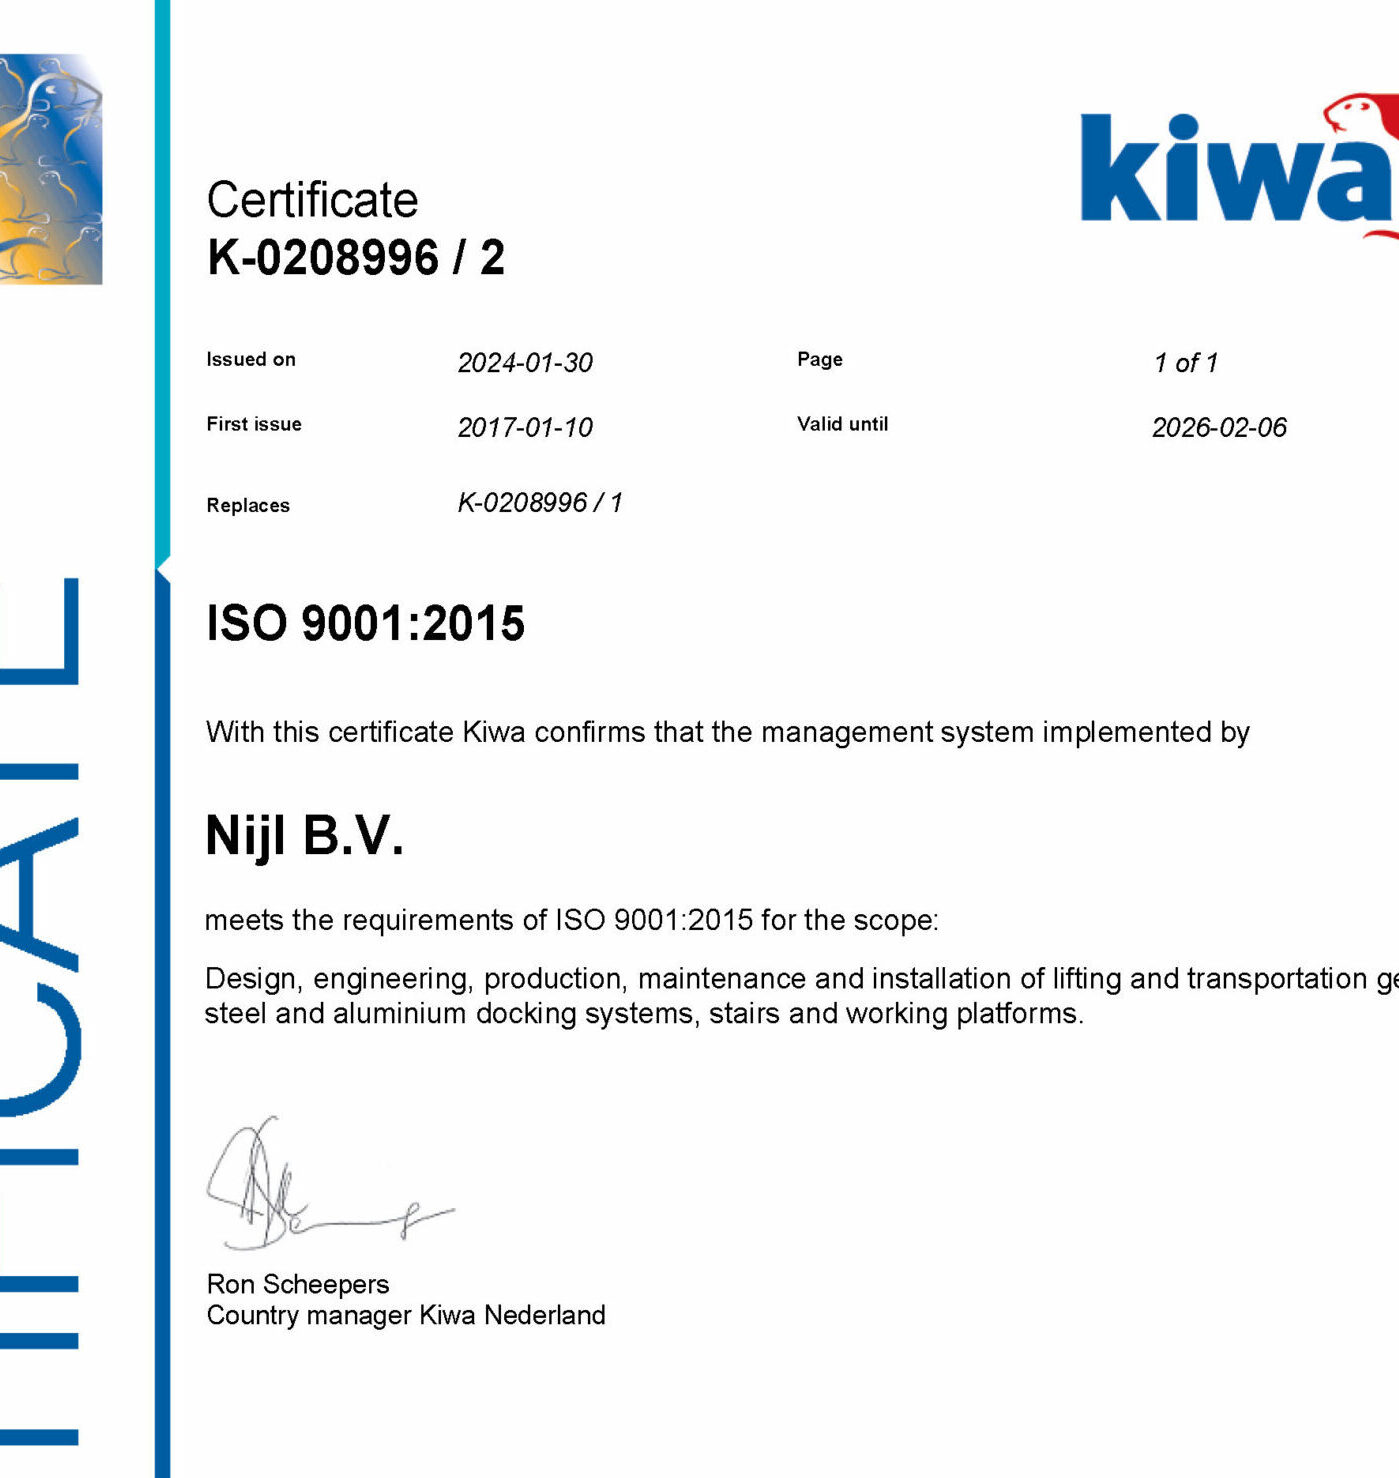 Renewal of NIJL’s ISO Certification